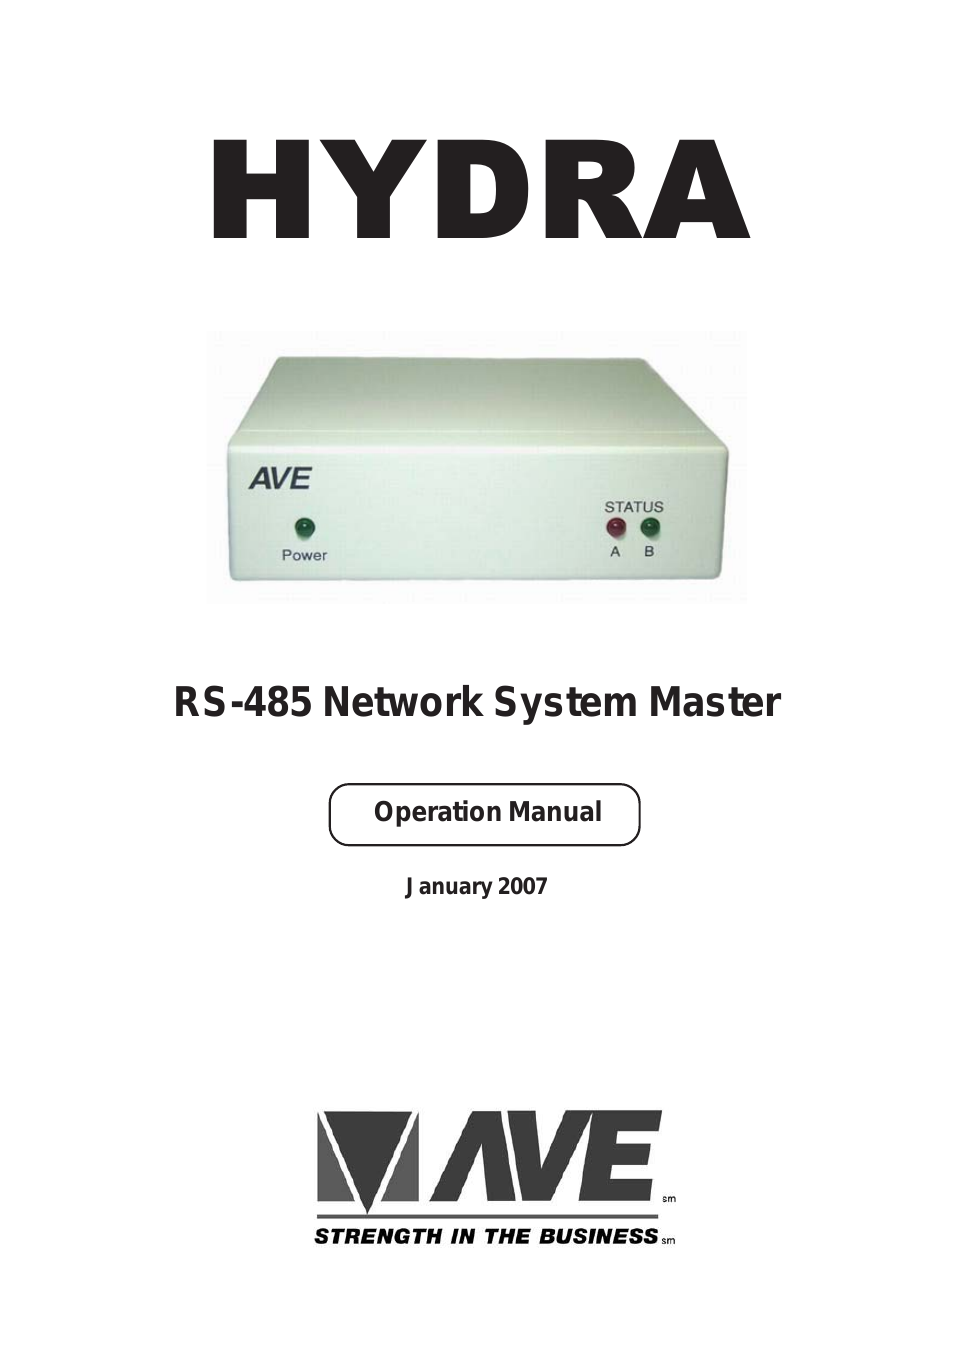 HYDRA RS-485